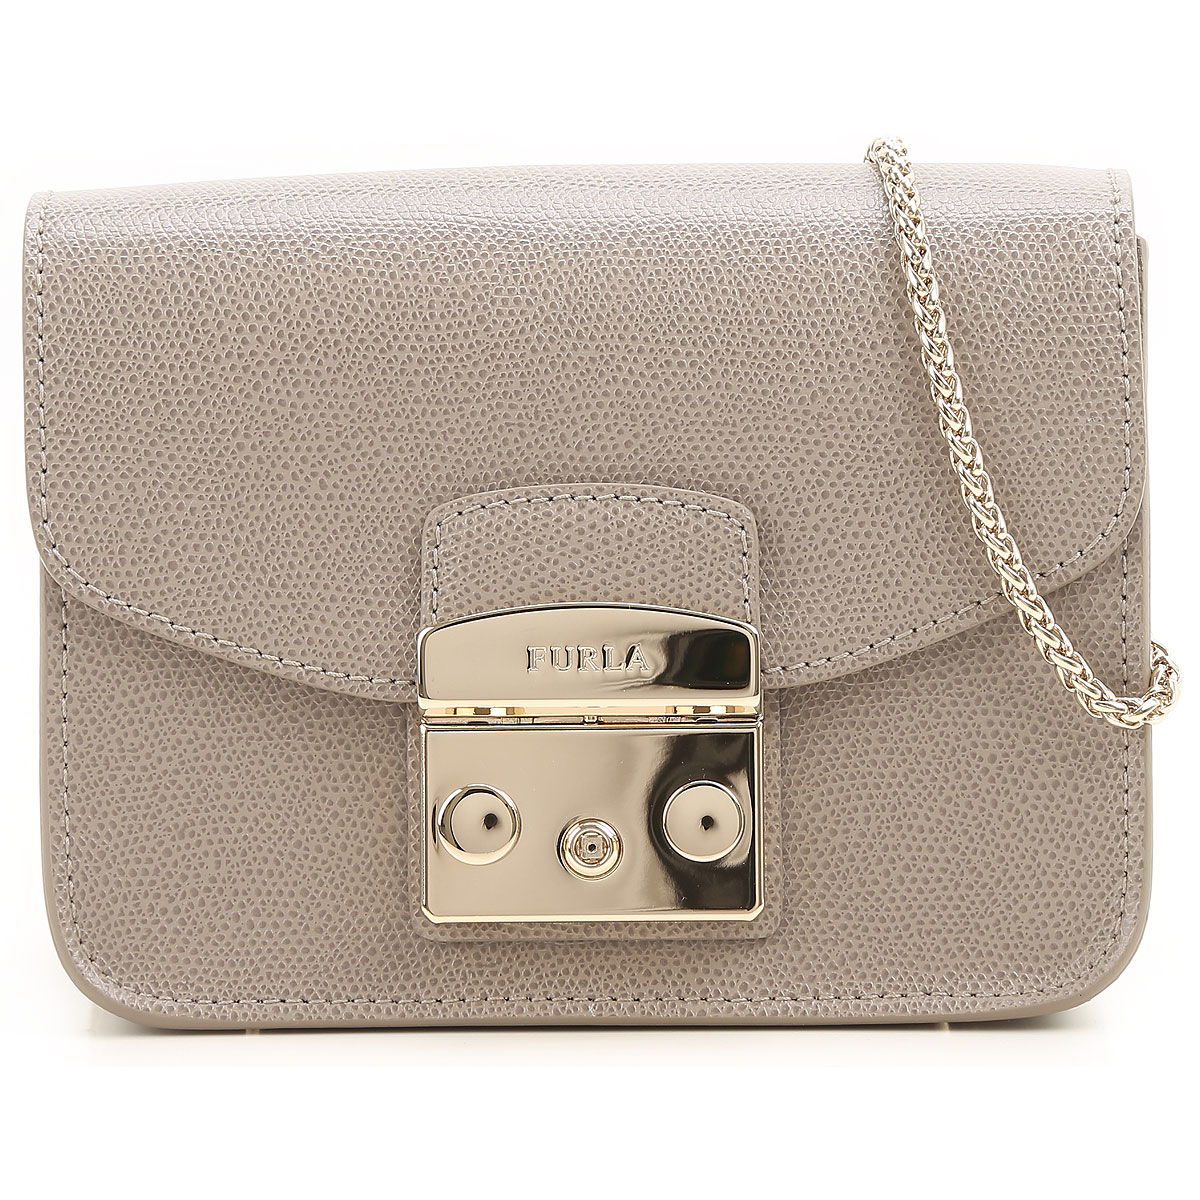 Handbags Furla, Style code: bgz7-851171-sabbiaB